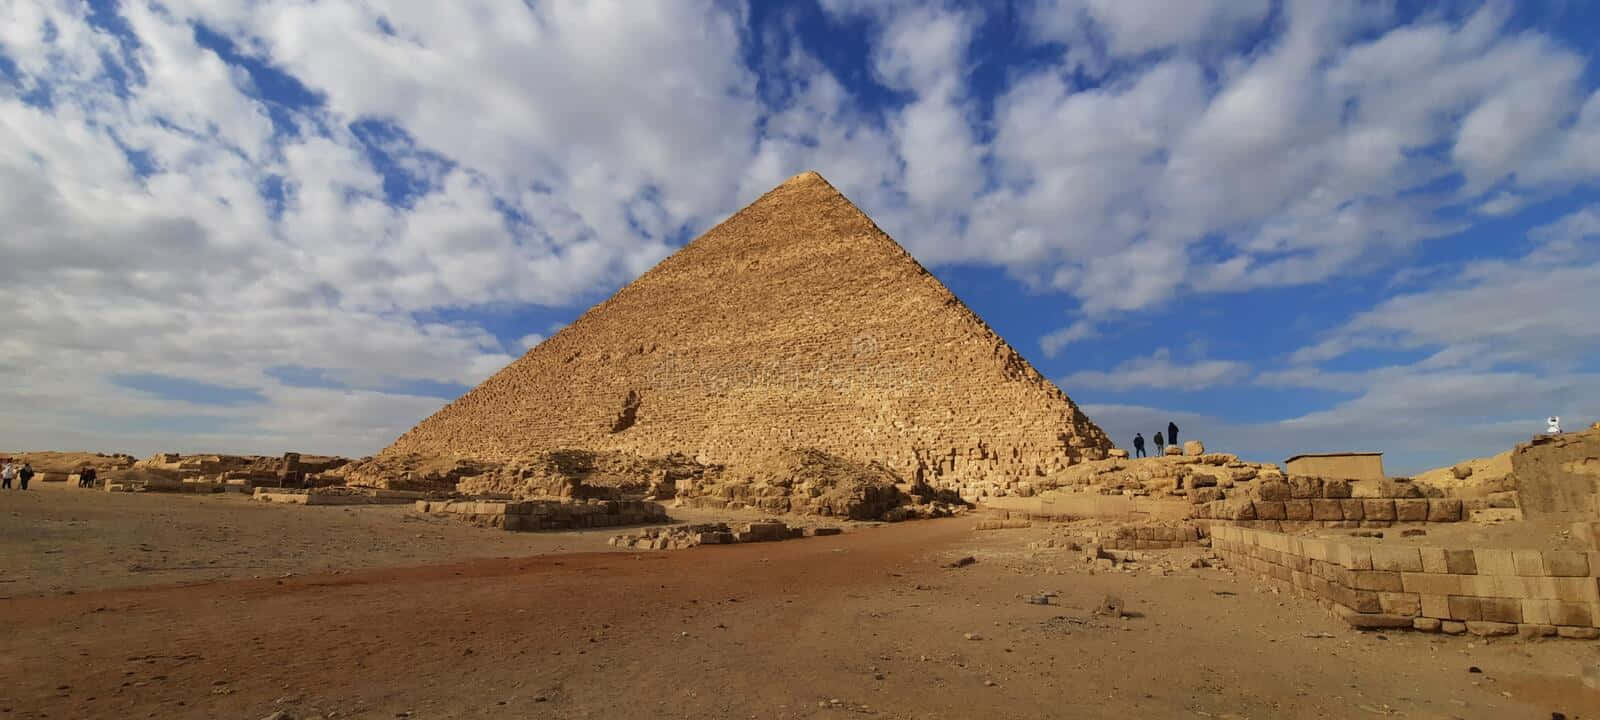 Great Pyramids In Egypt Desktop Wallpaper